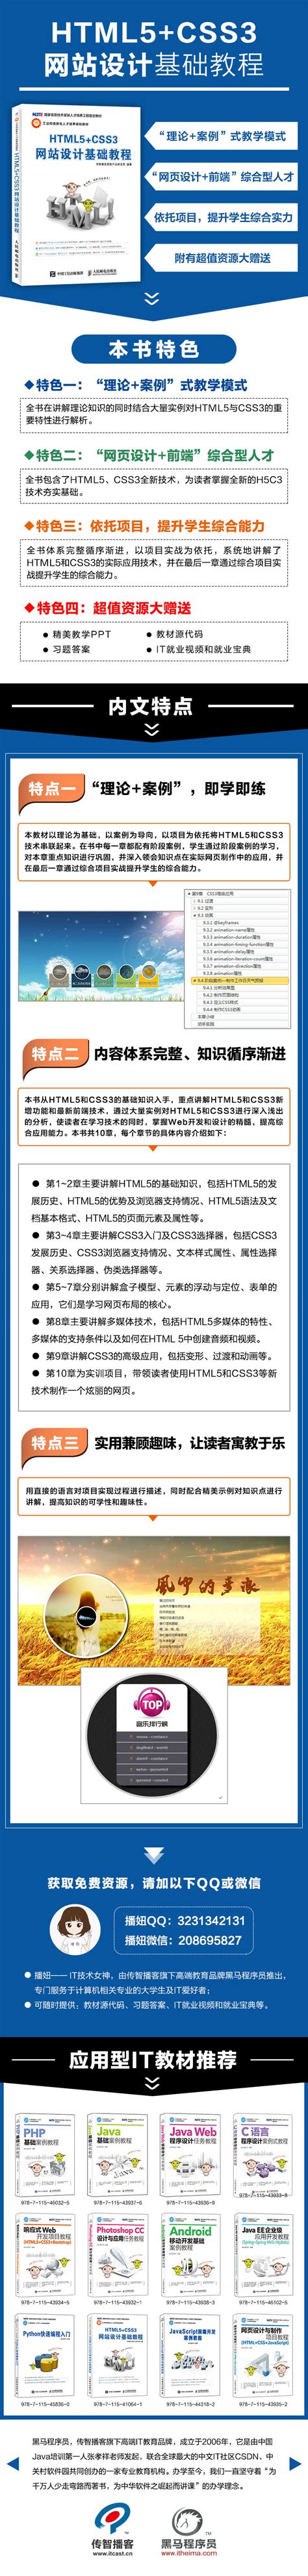 《HTML5+CSS3网站设计基础教程》[76M]百度网盘pdf下载